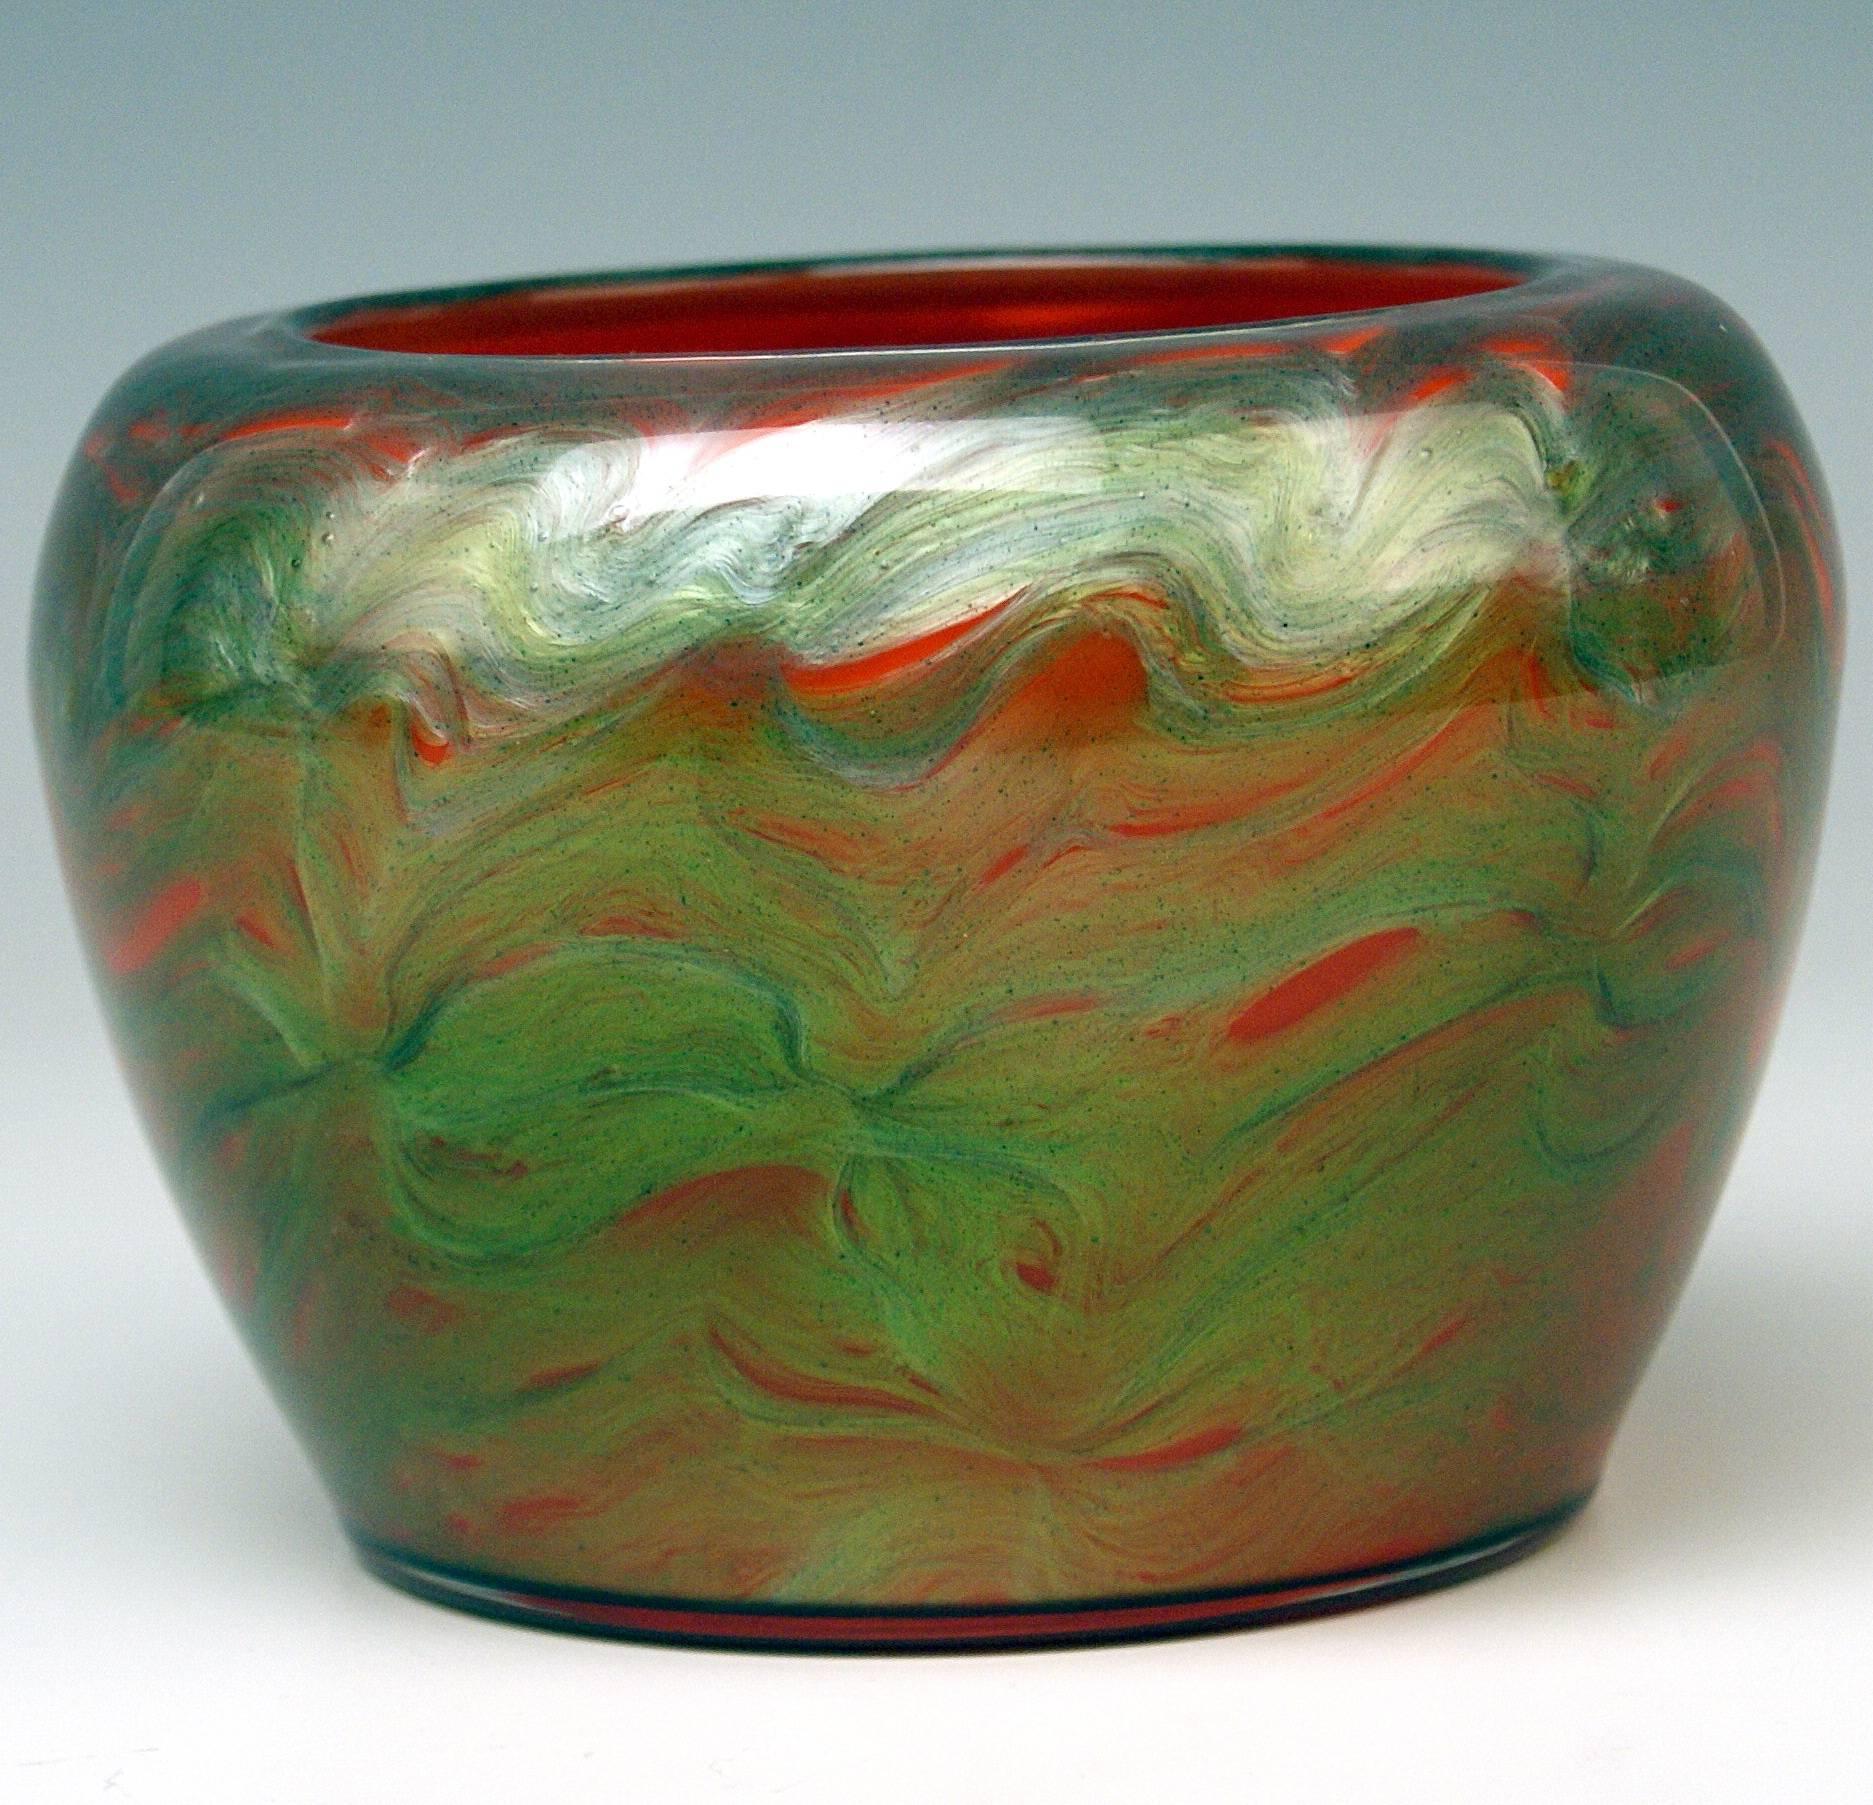 Vase Loetz Bohemia Art Nouveau Decor Titania Genre 4212 Orange Green Glass, 1906 For Sale 2